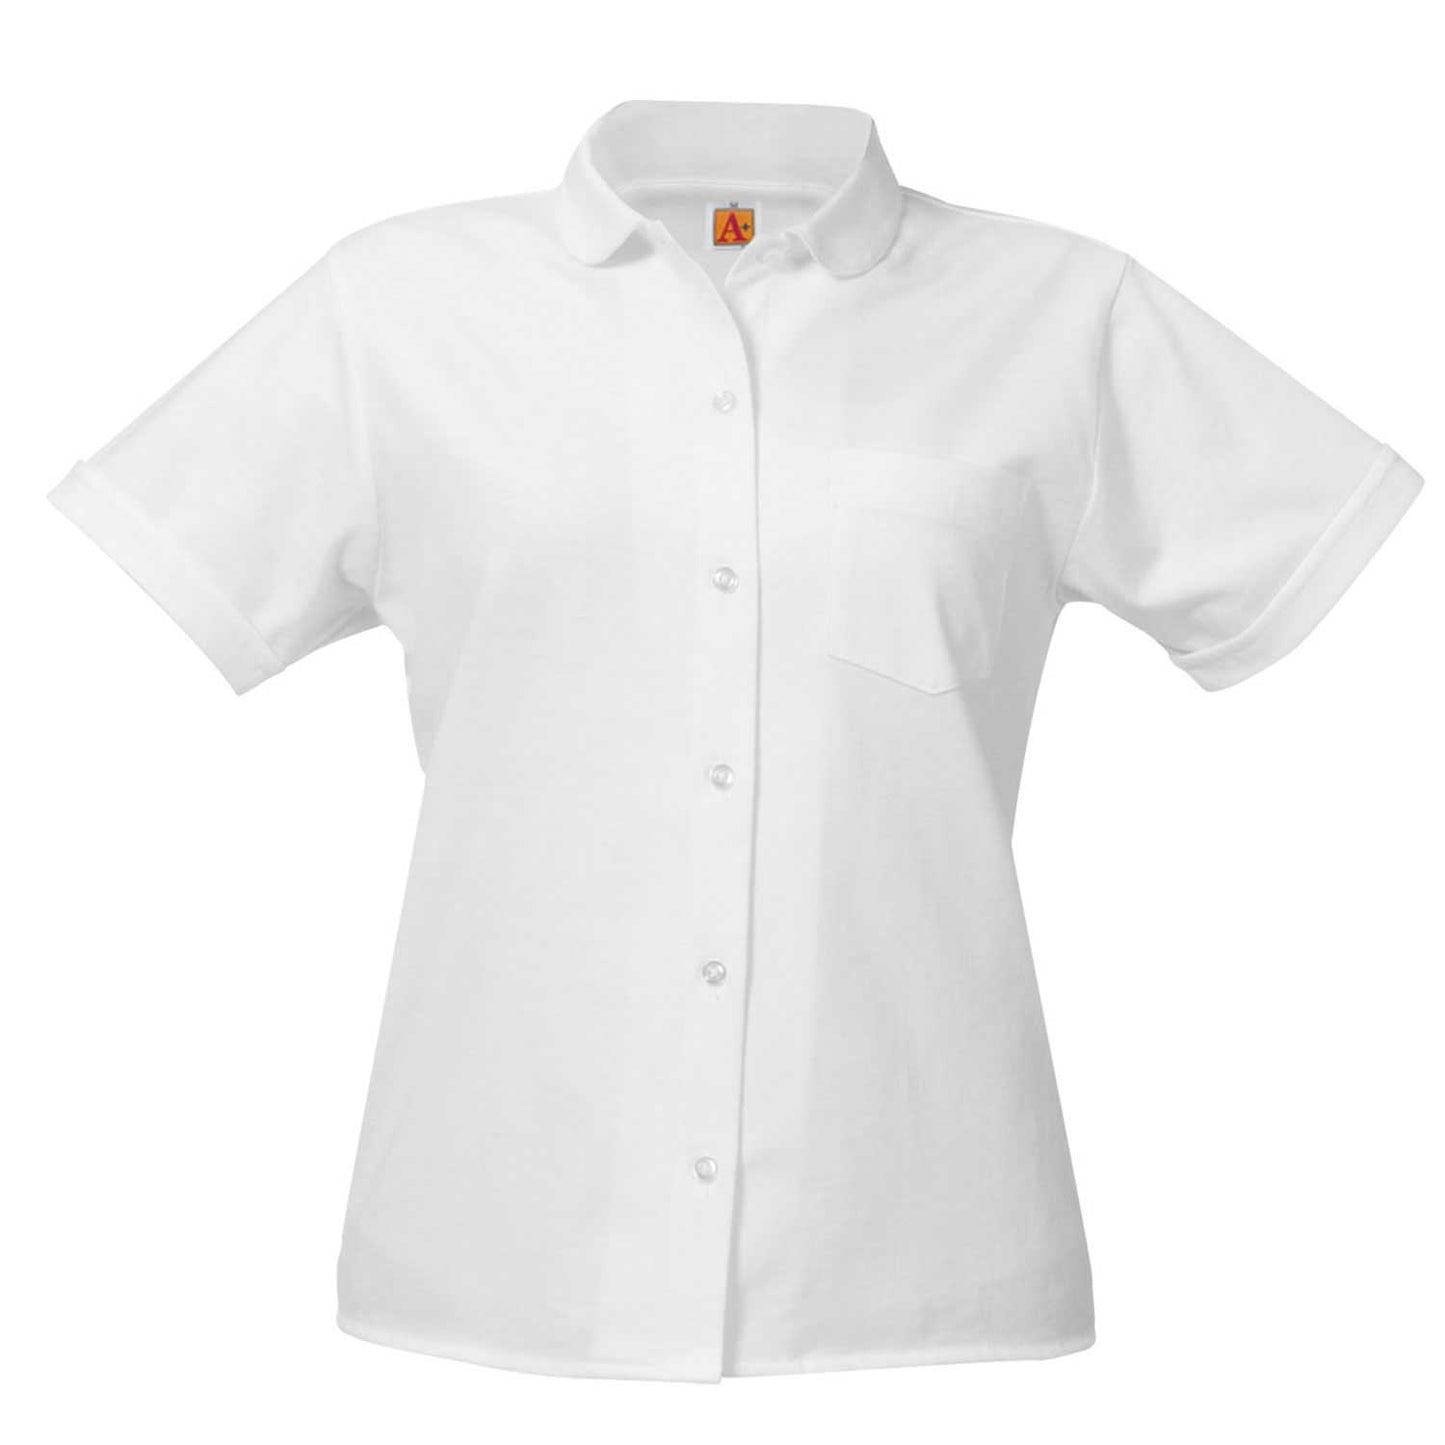 Jersey Knit Short Sleeve Shirt (Female) w/Logo - 1104